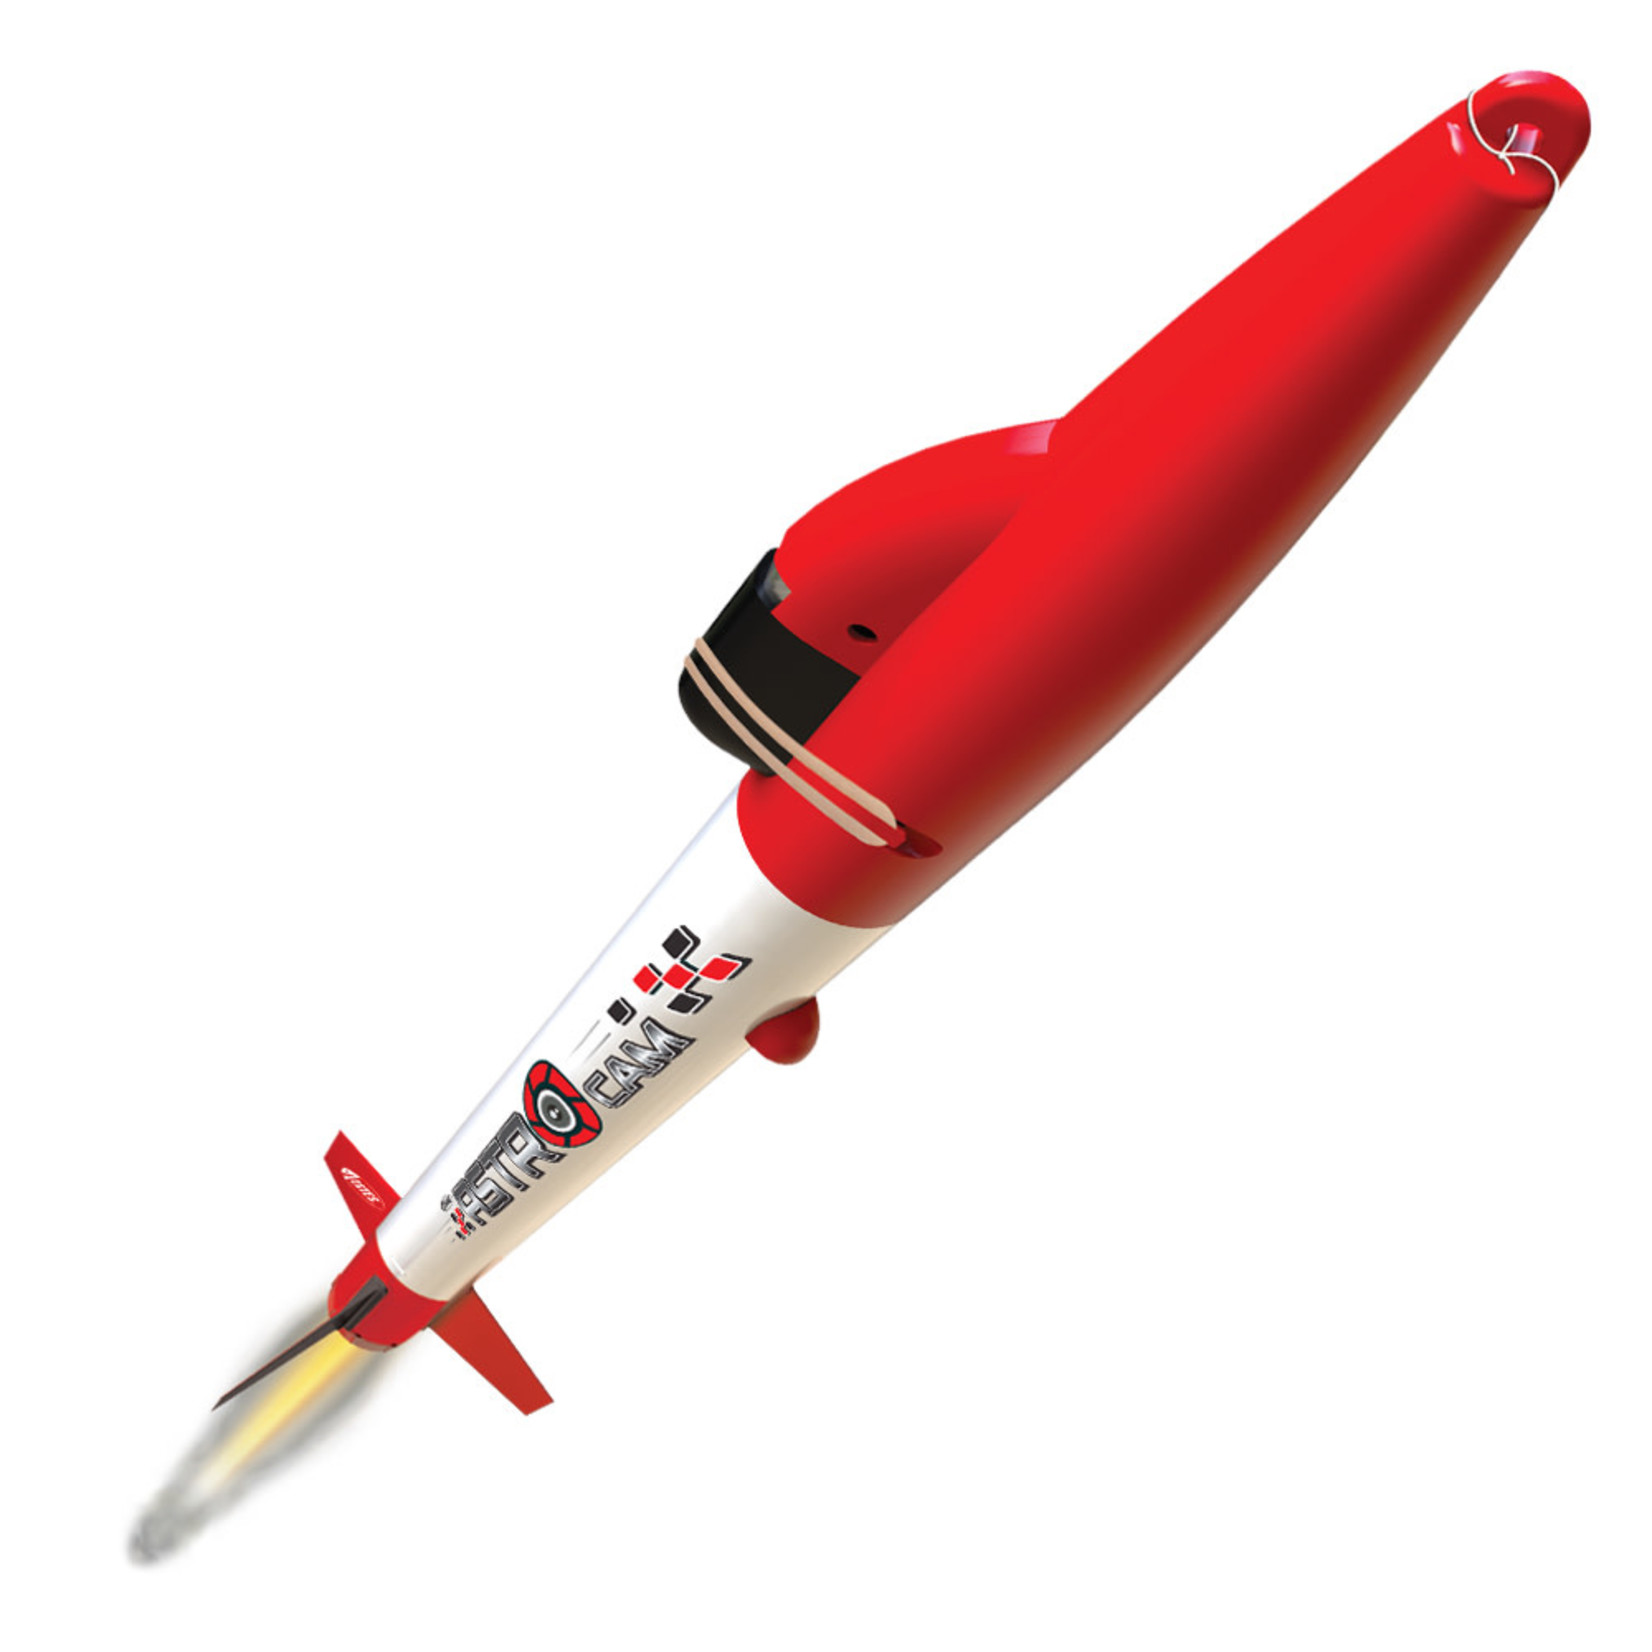 Estes Estes Astrocam Flying Model Rocket #EST7308